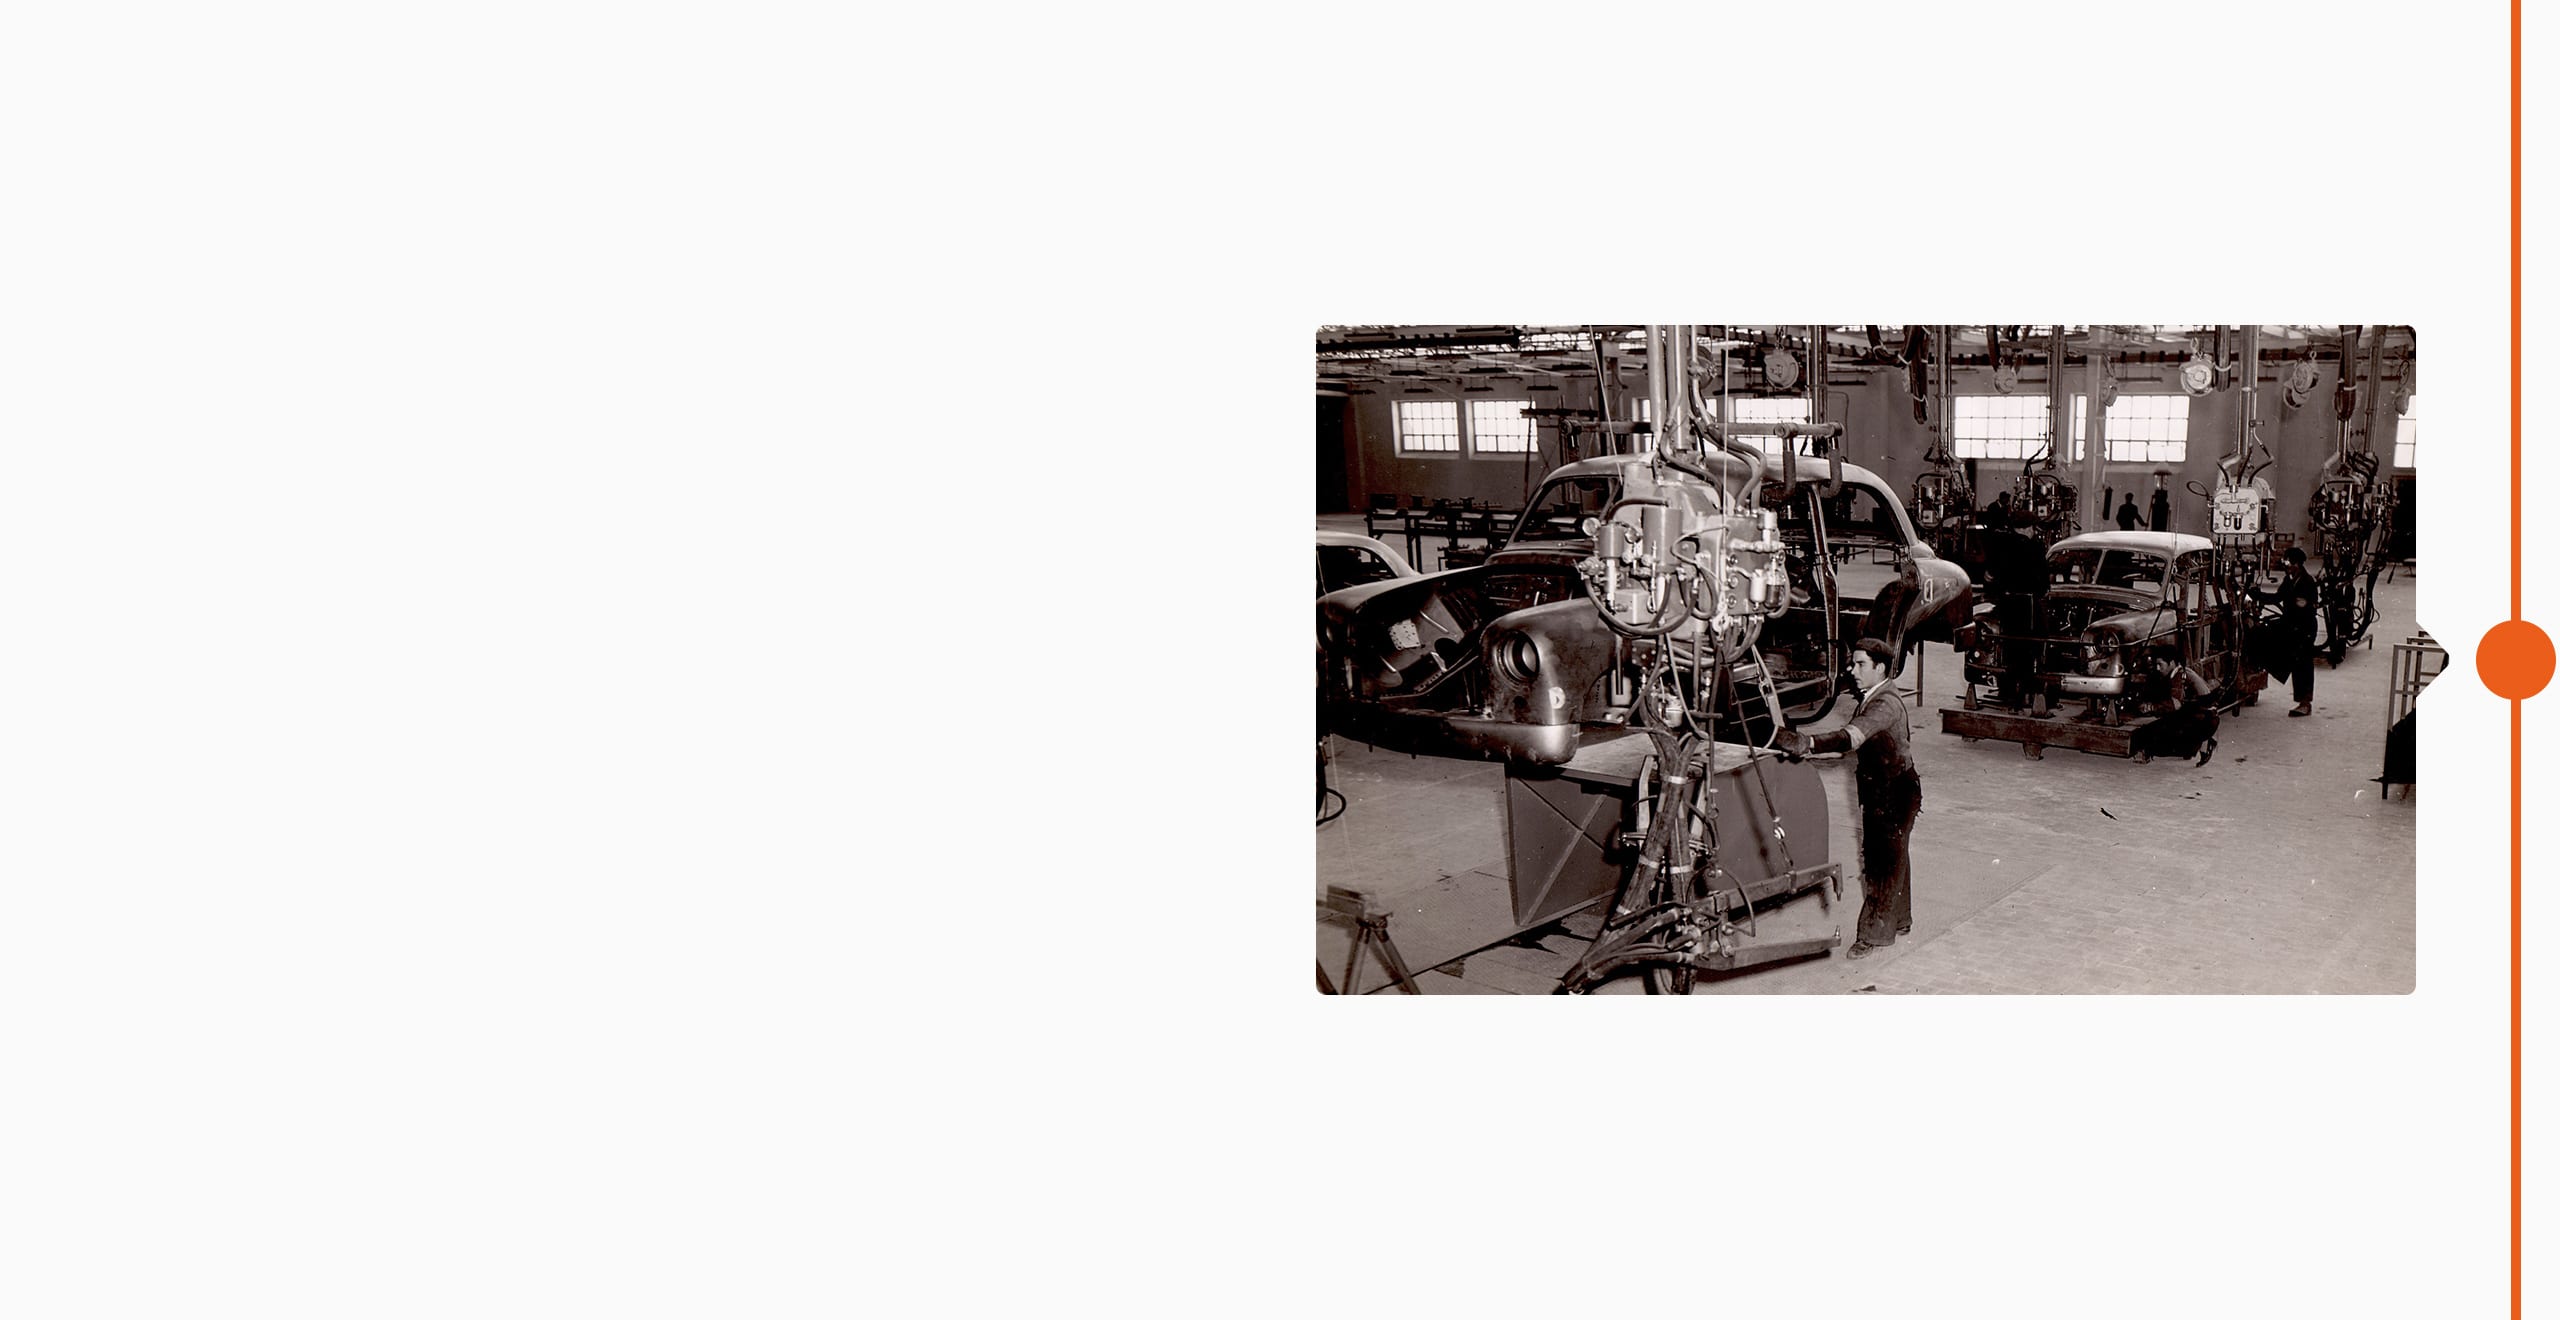 SEAT varumärke historia 1953 SEAT 1400 bilmodel - Zona Franca fabriken svartvit fotot